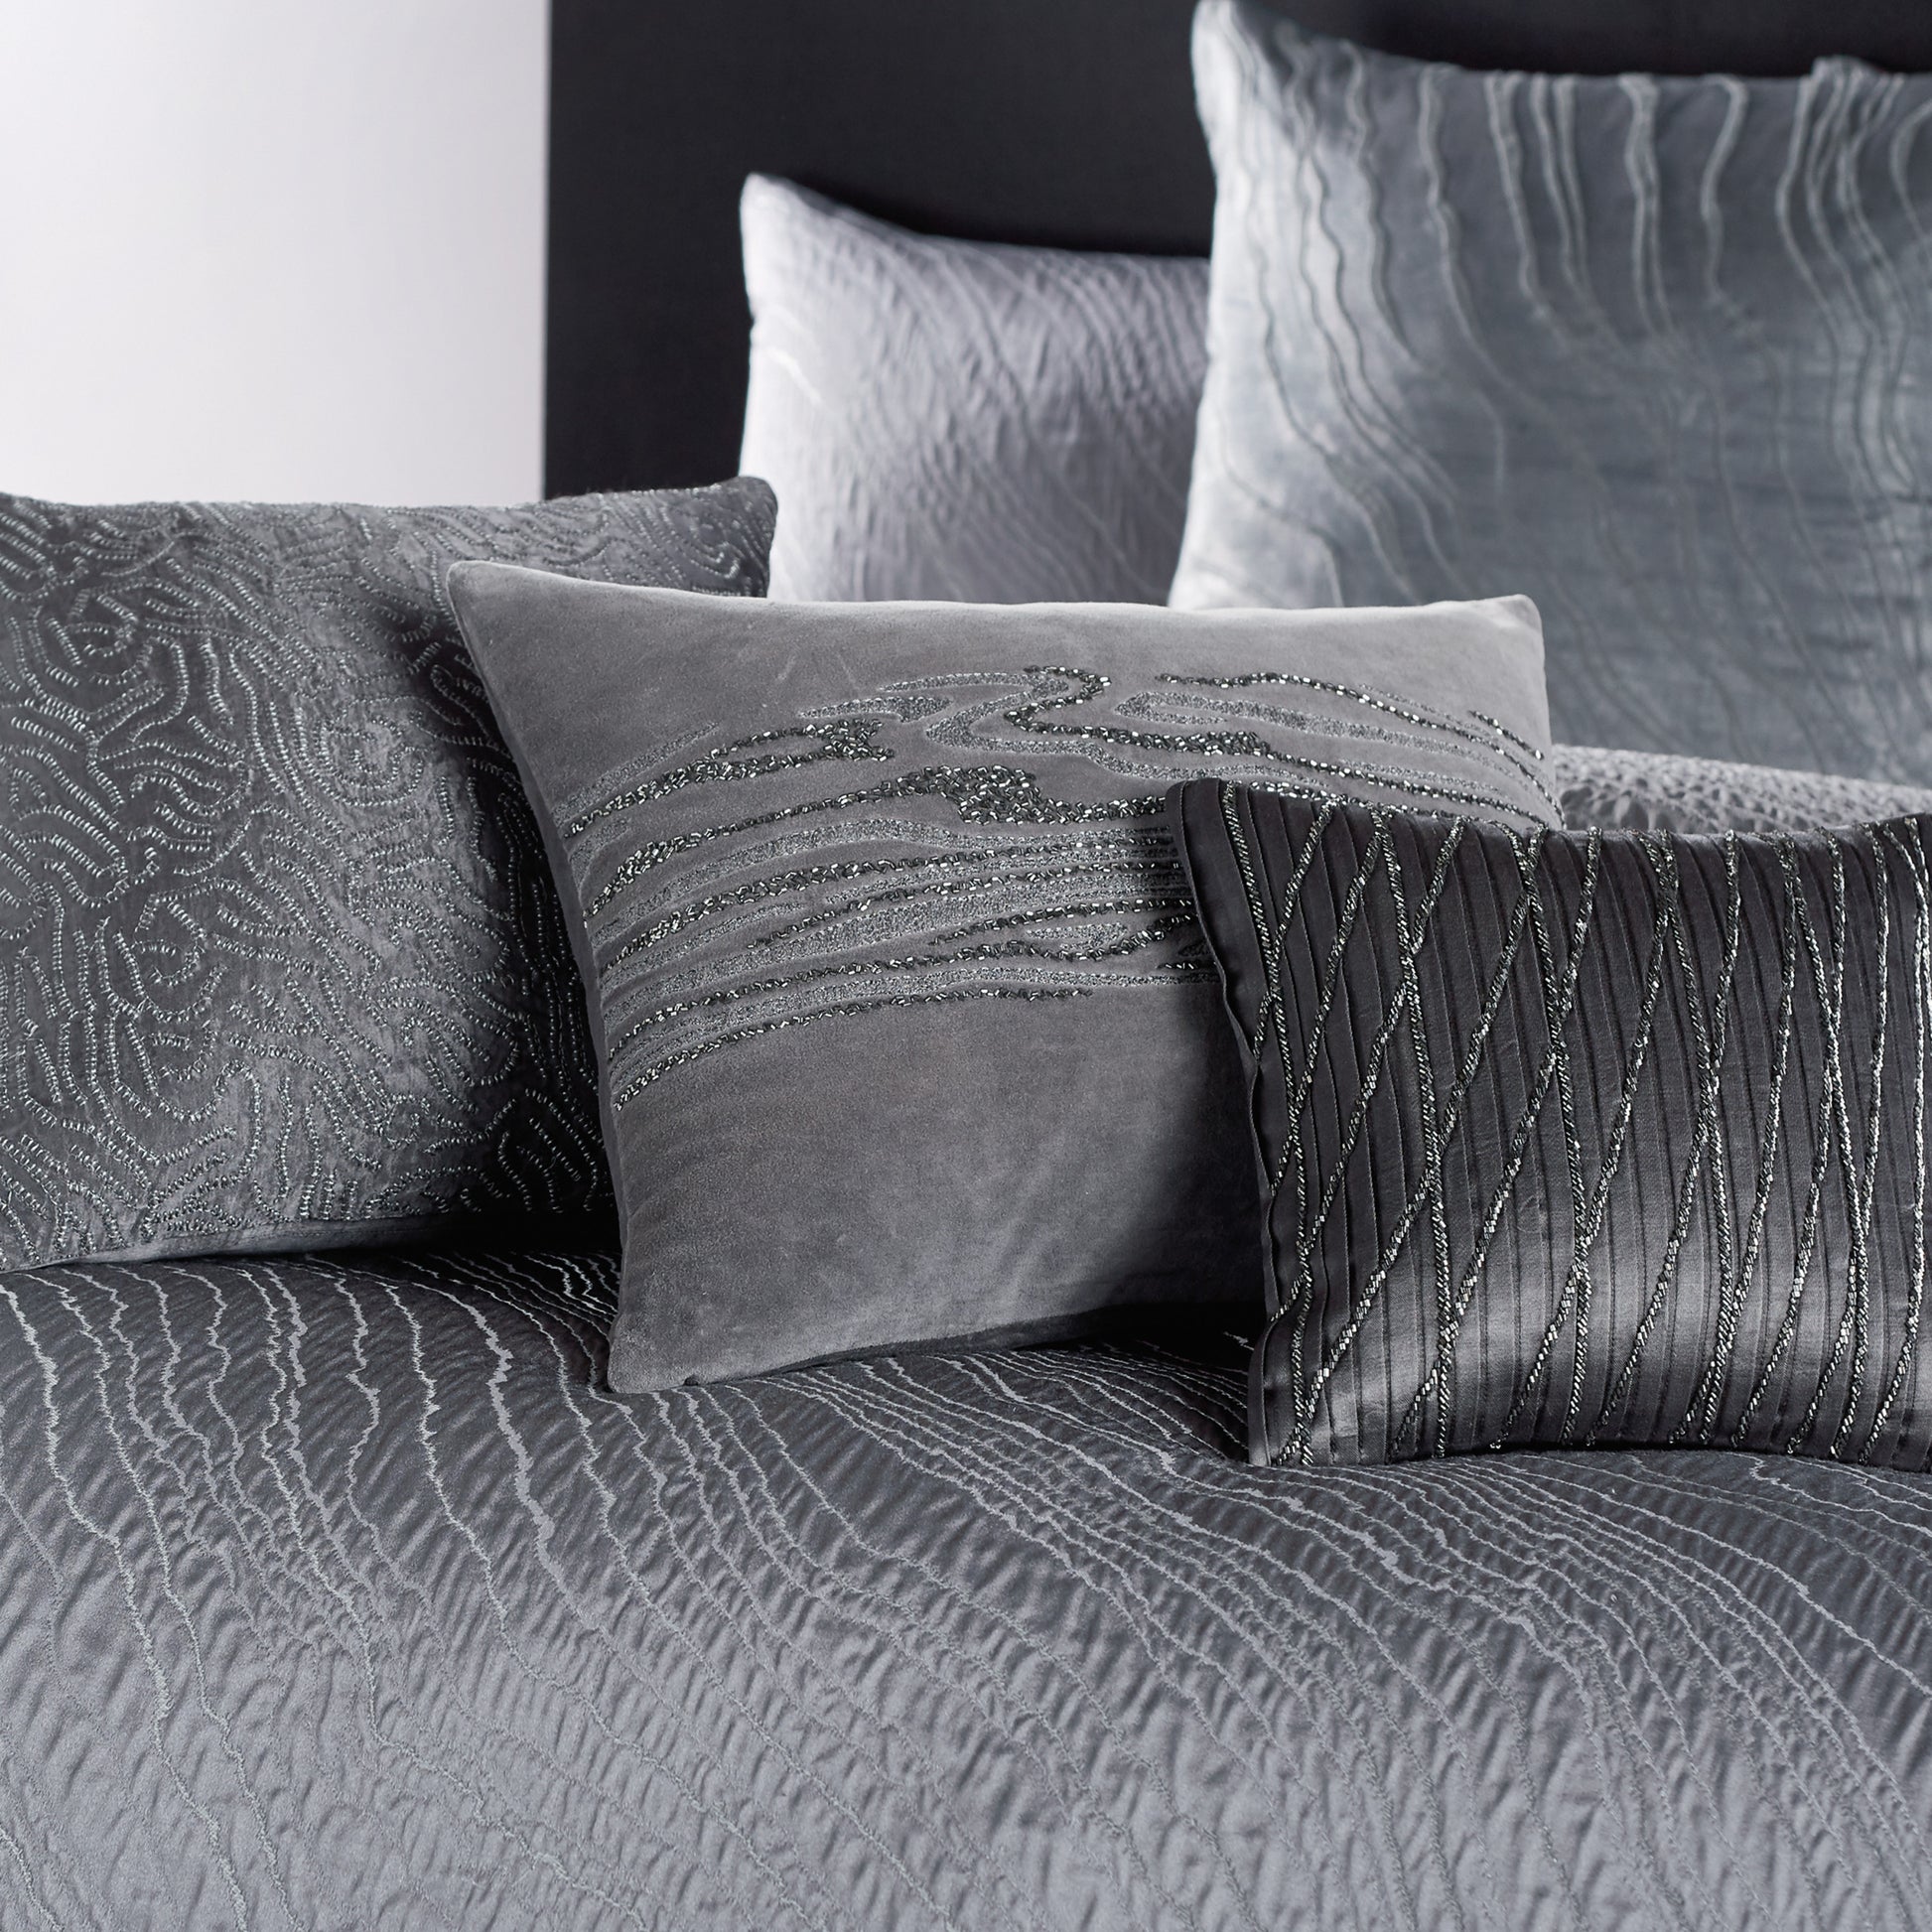 Donna Karan Current Bedding Collection Decorative Pillow